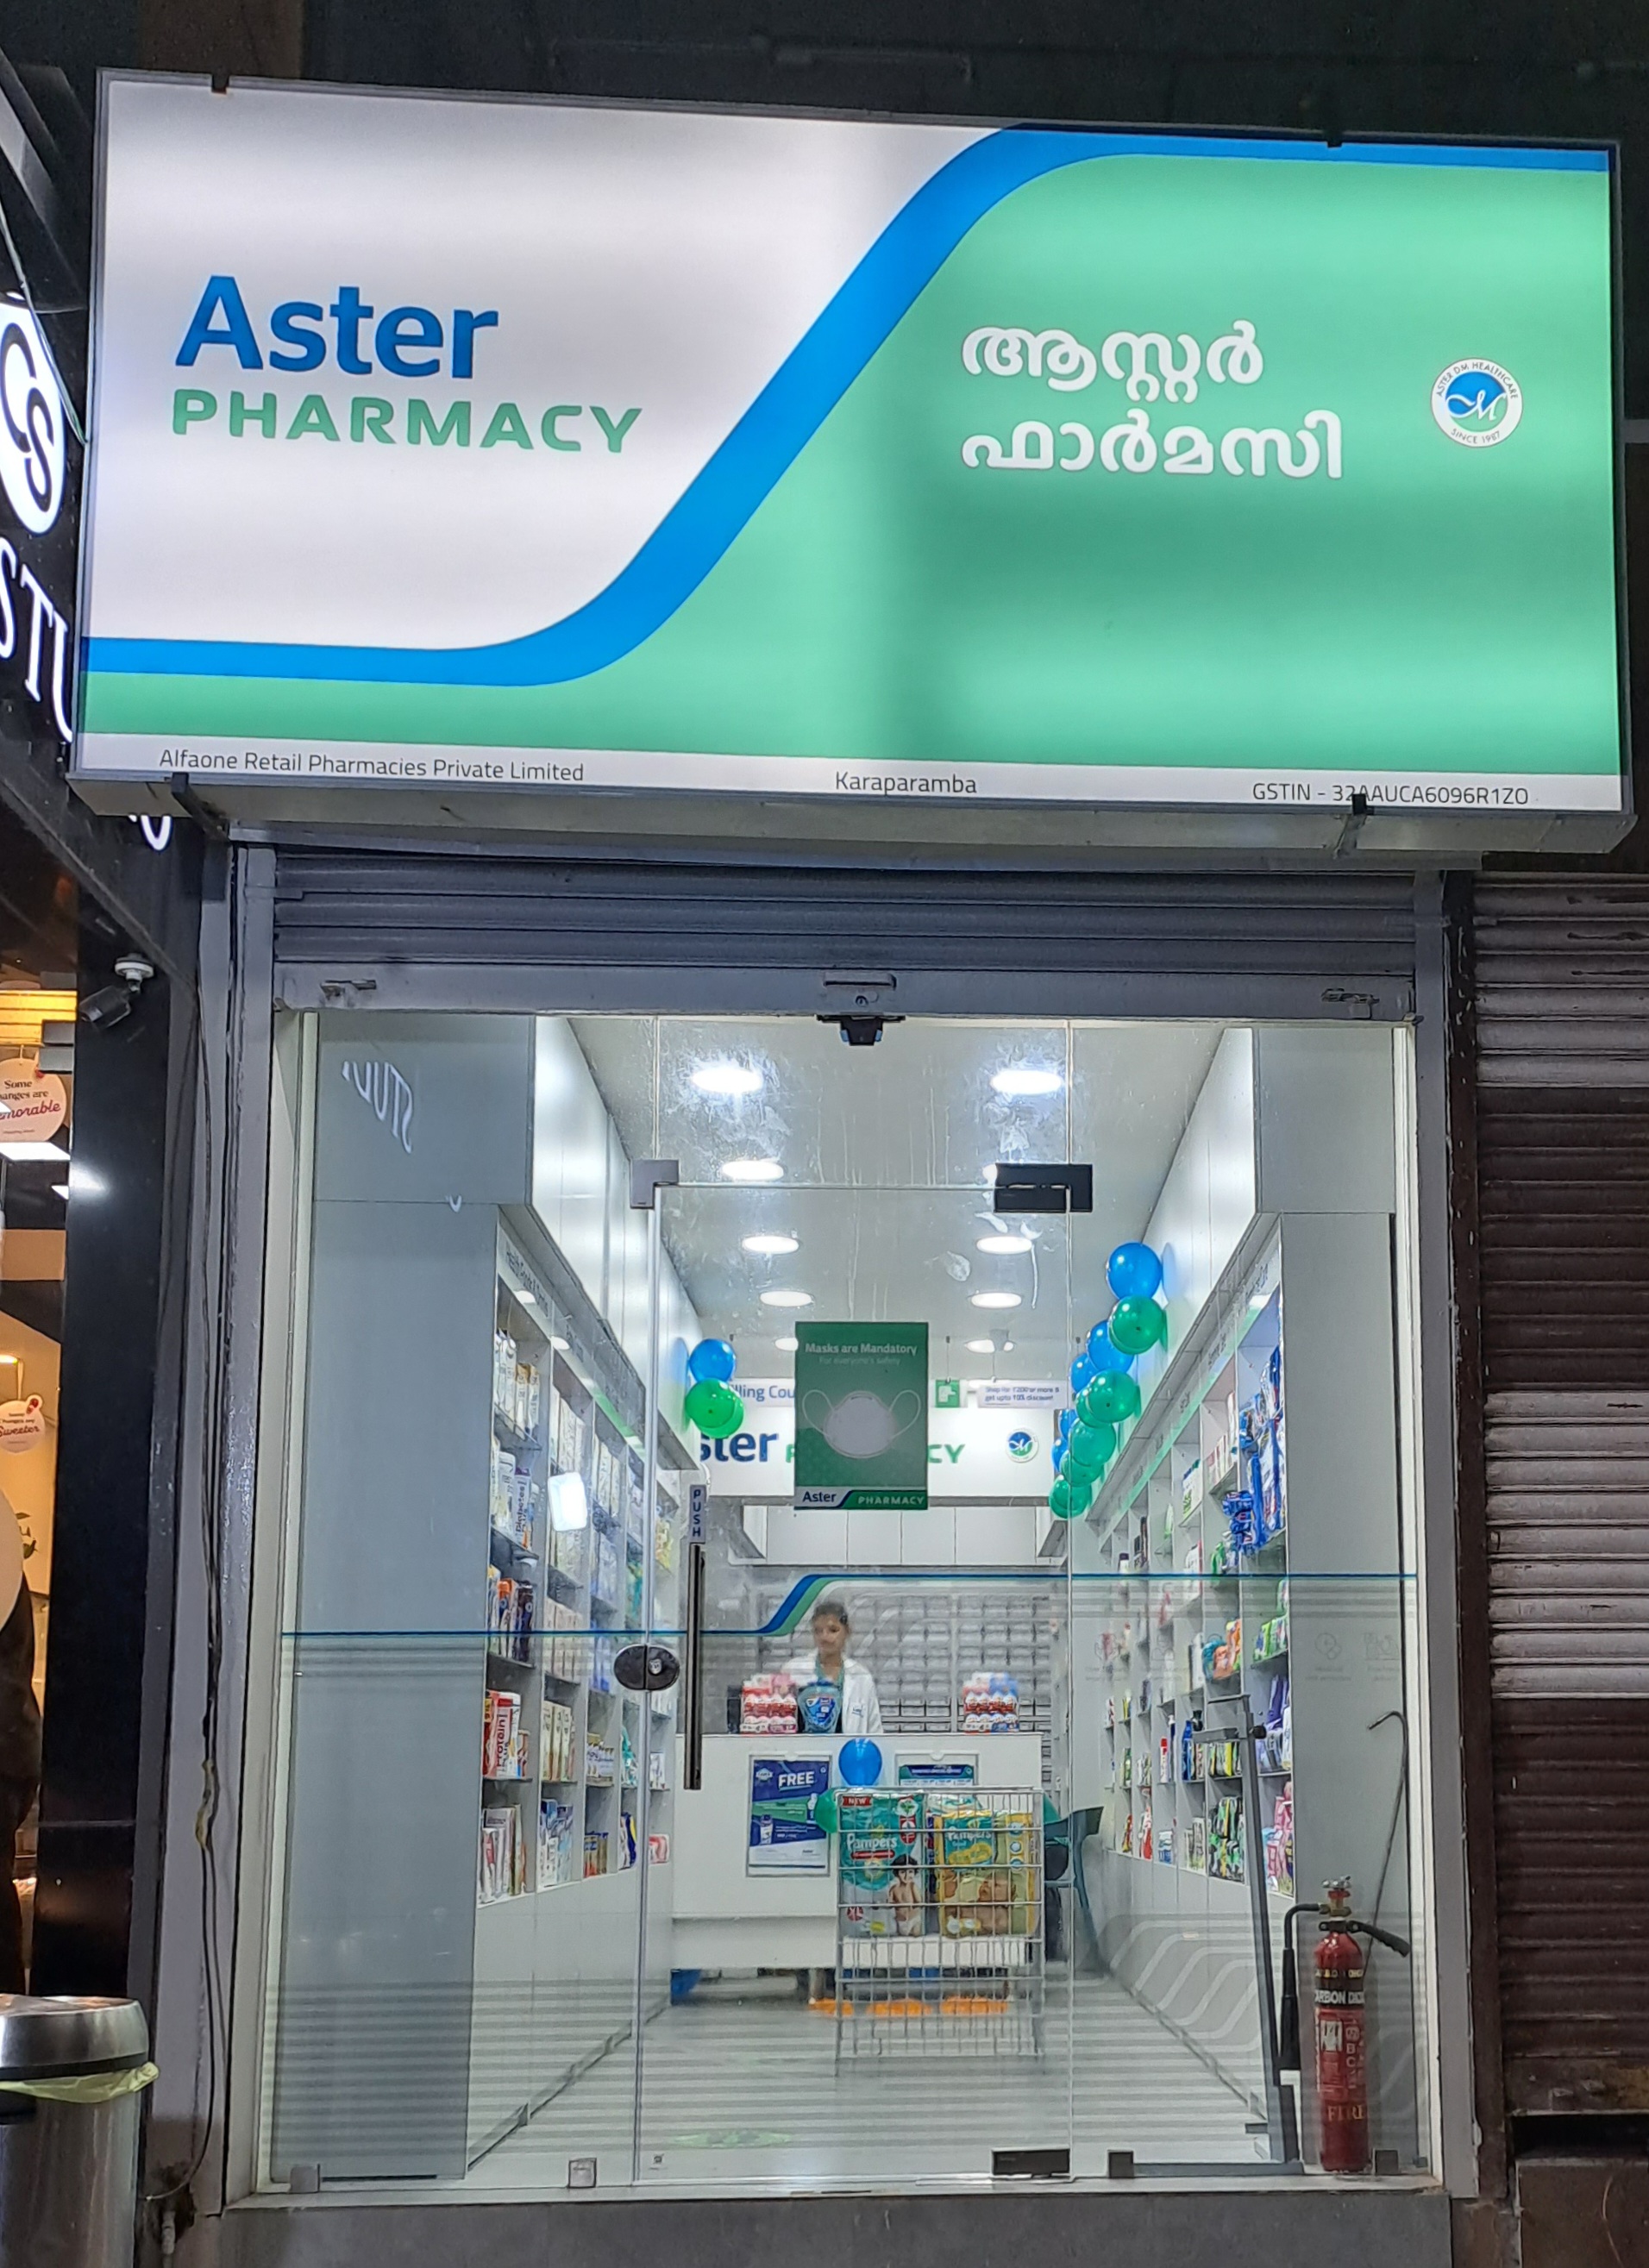 Aster Pharmacy in Karaparamba, Kozhikode